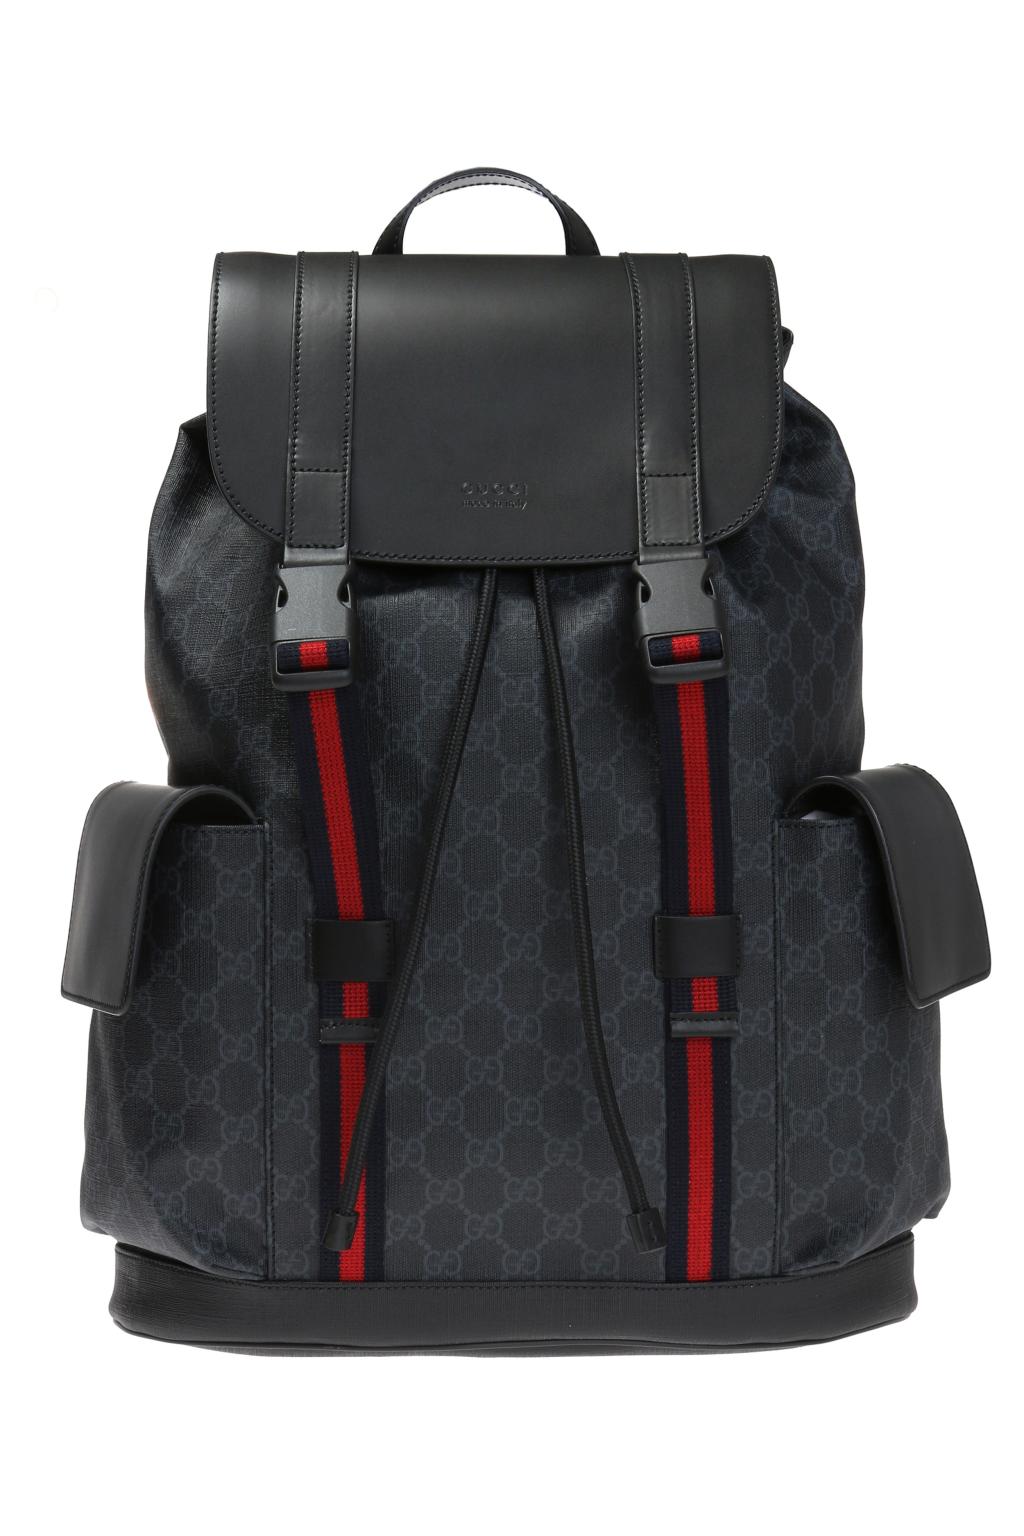 Grey 'GG Supreme' canvas backpack Gucci - Vitkac Canada